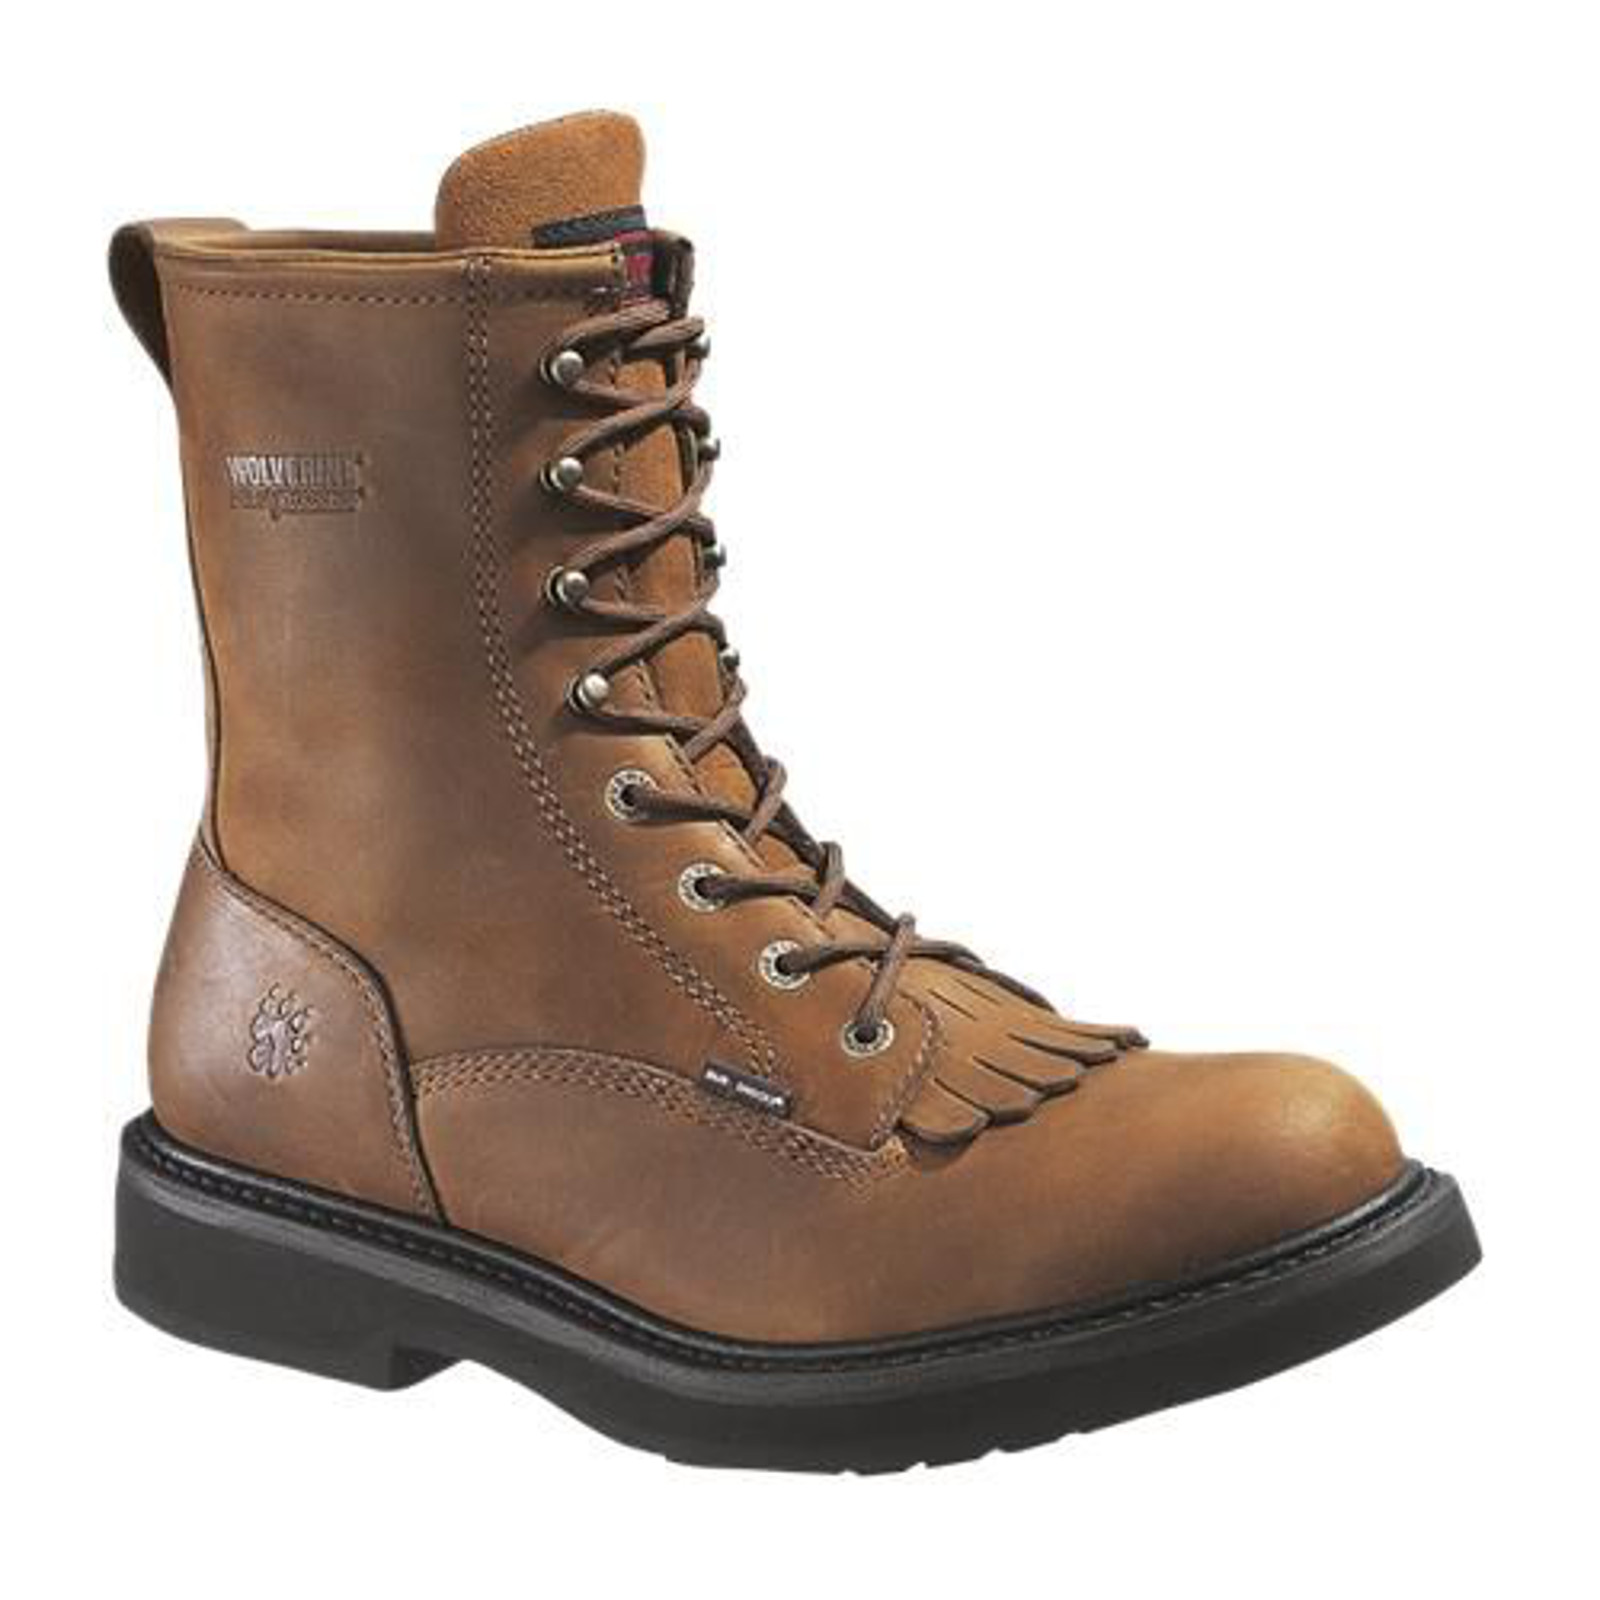 UPC 098776023200 product image for Men's Ingham Kiltie DuraShocks Brown Leather Steel-Toe Work Boots | upcitemdb.com